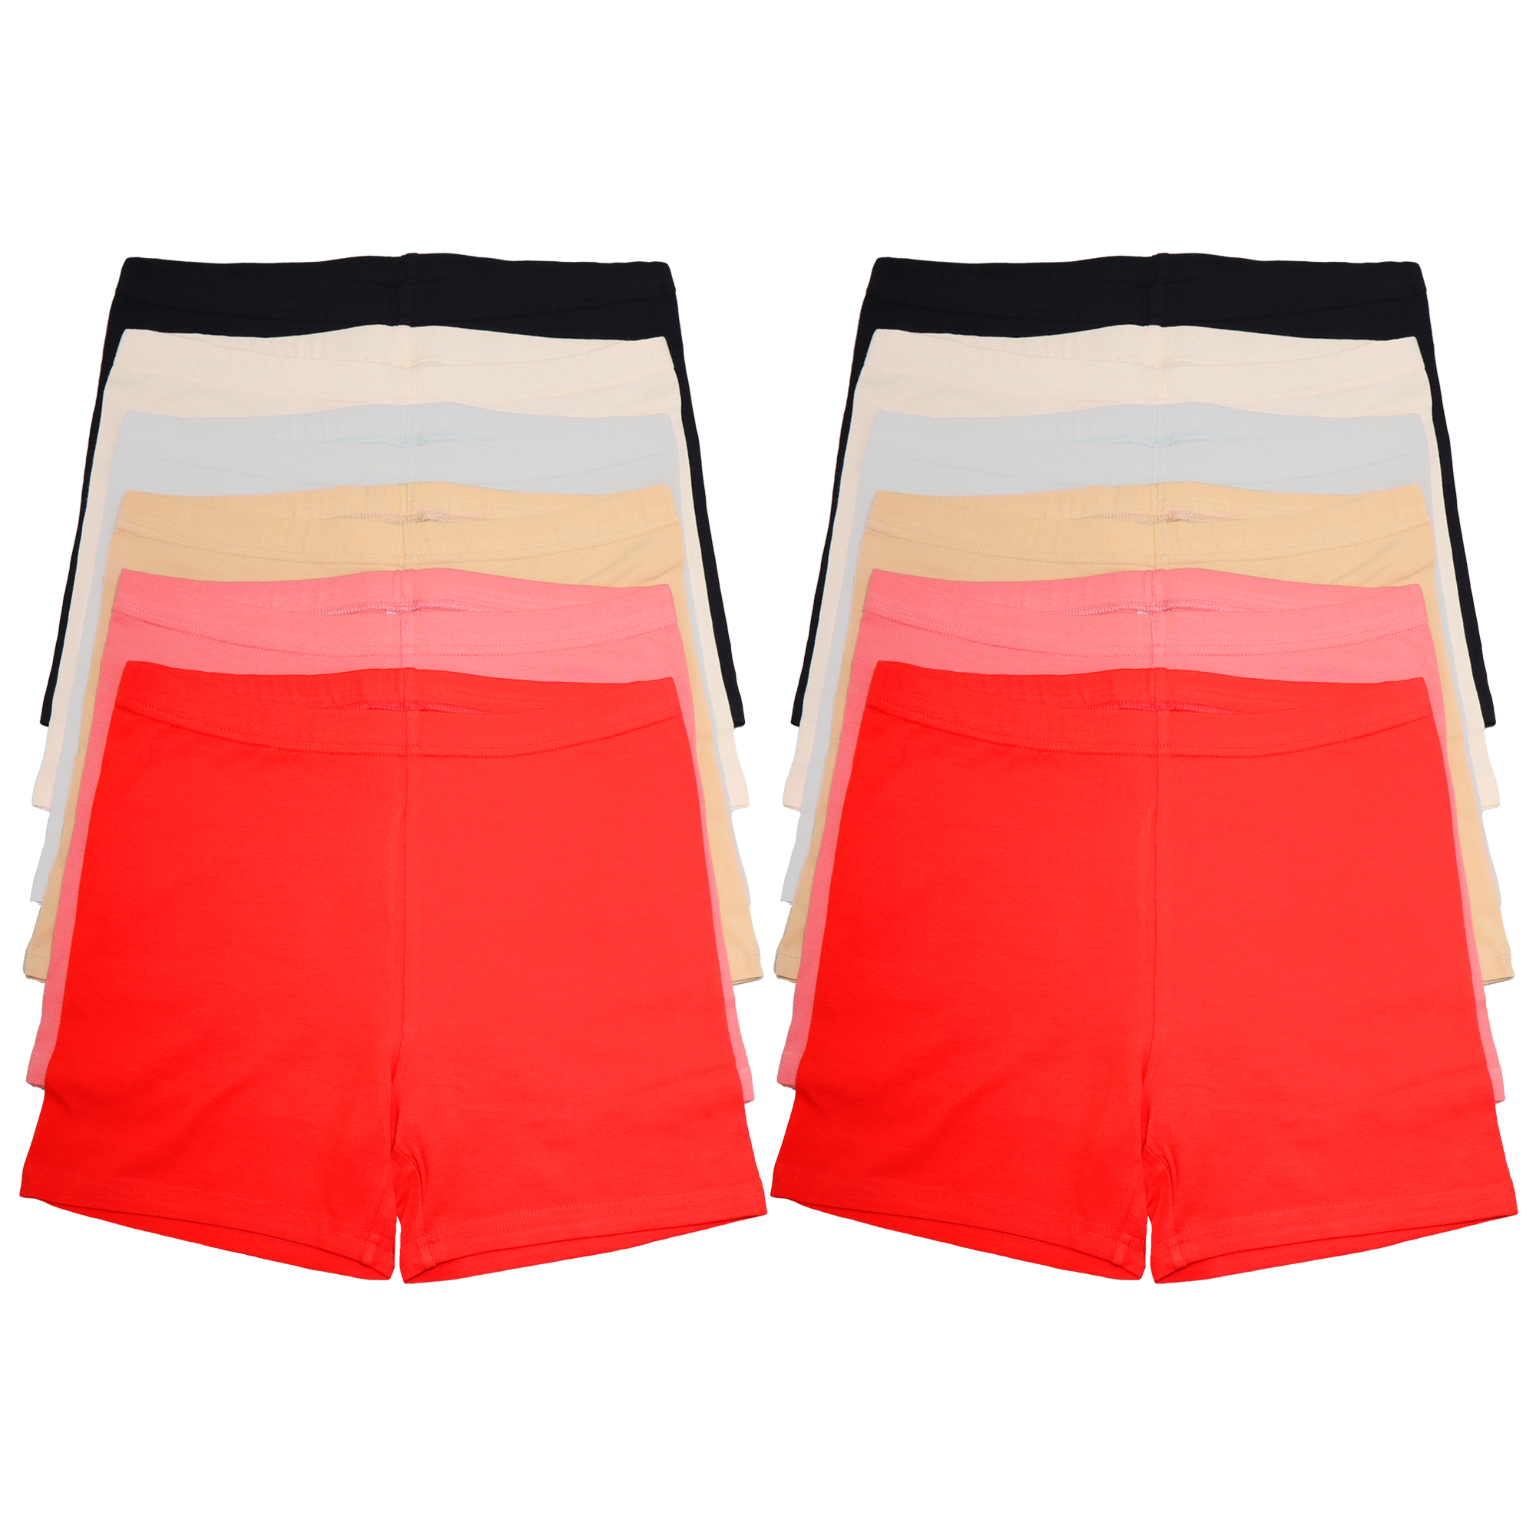 Bulk Women's Boy Shorts Bottoms in Assorted Colors